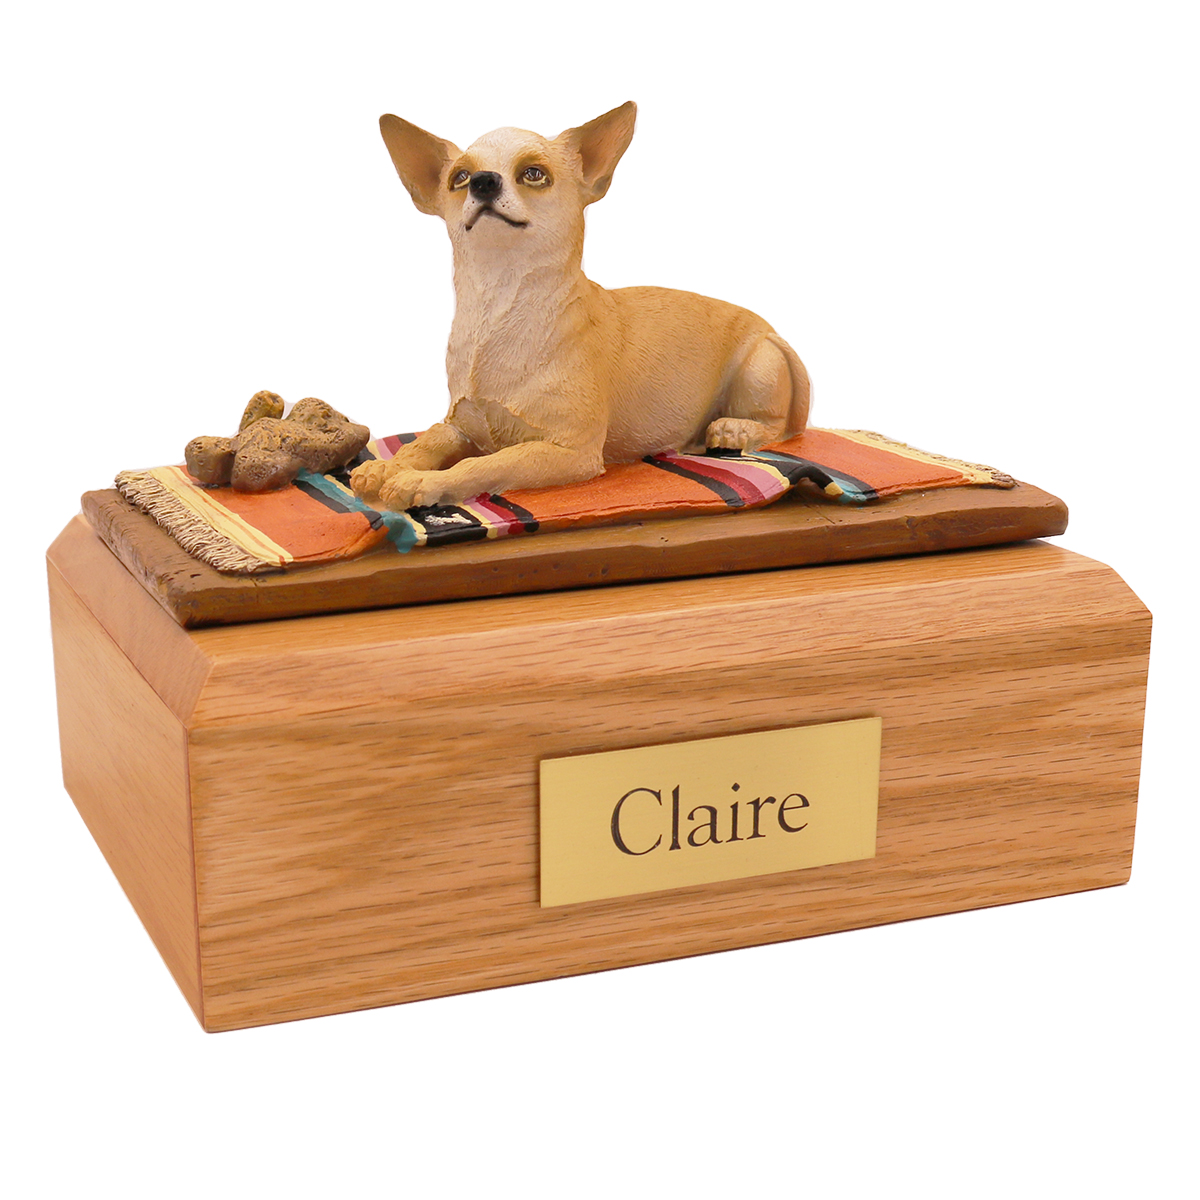 Chihuahua, Laying - Figurine Urn